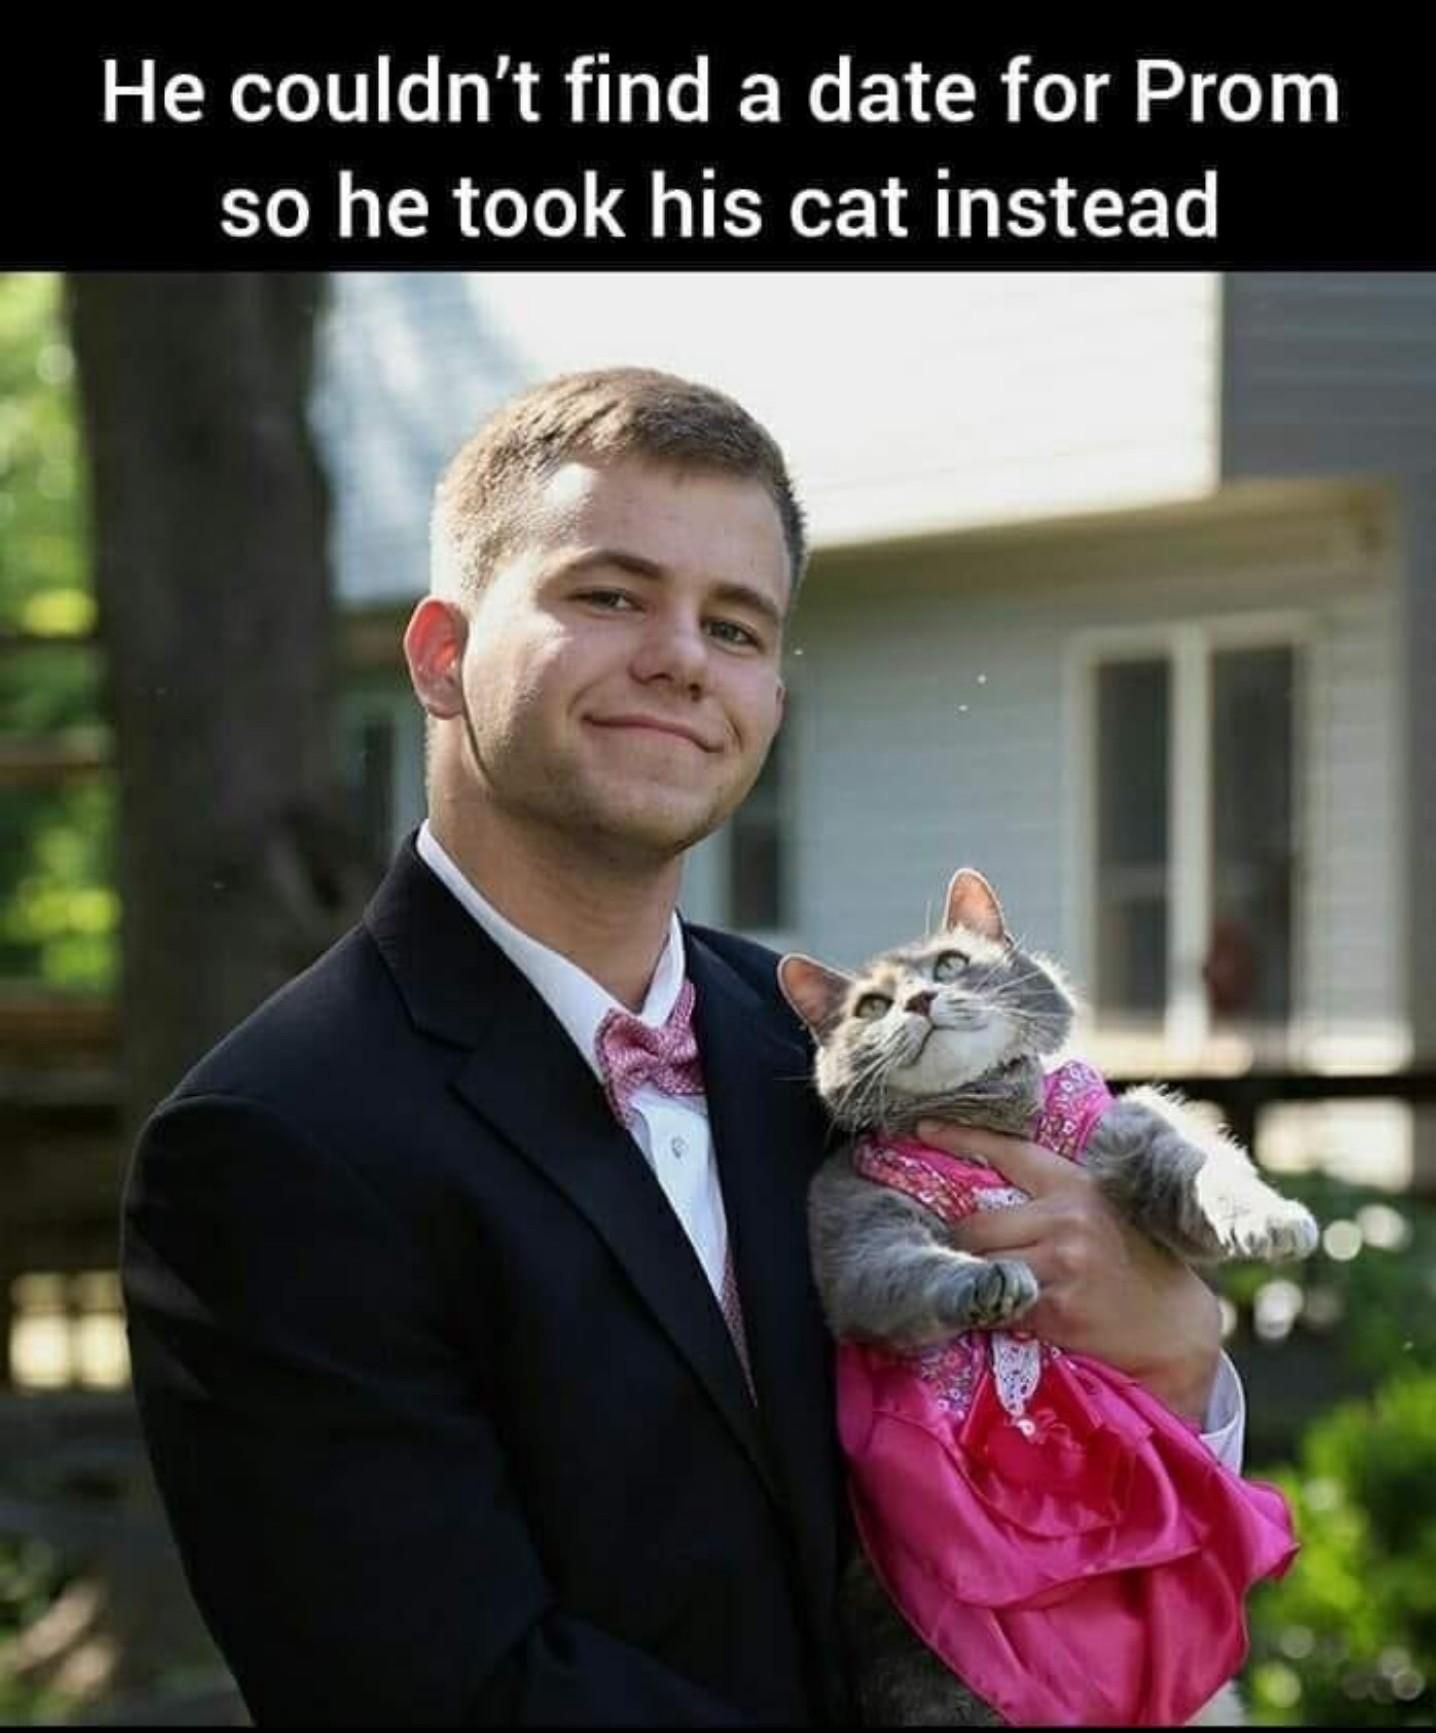 He has a cute cat